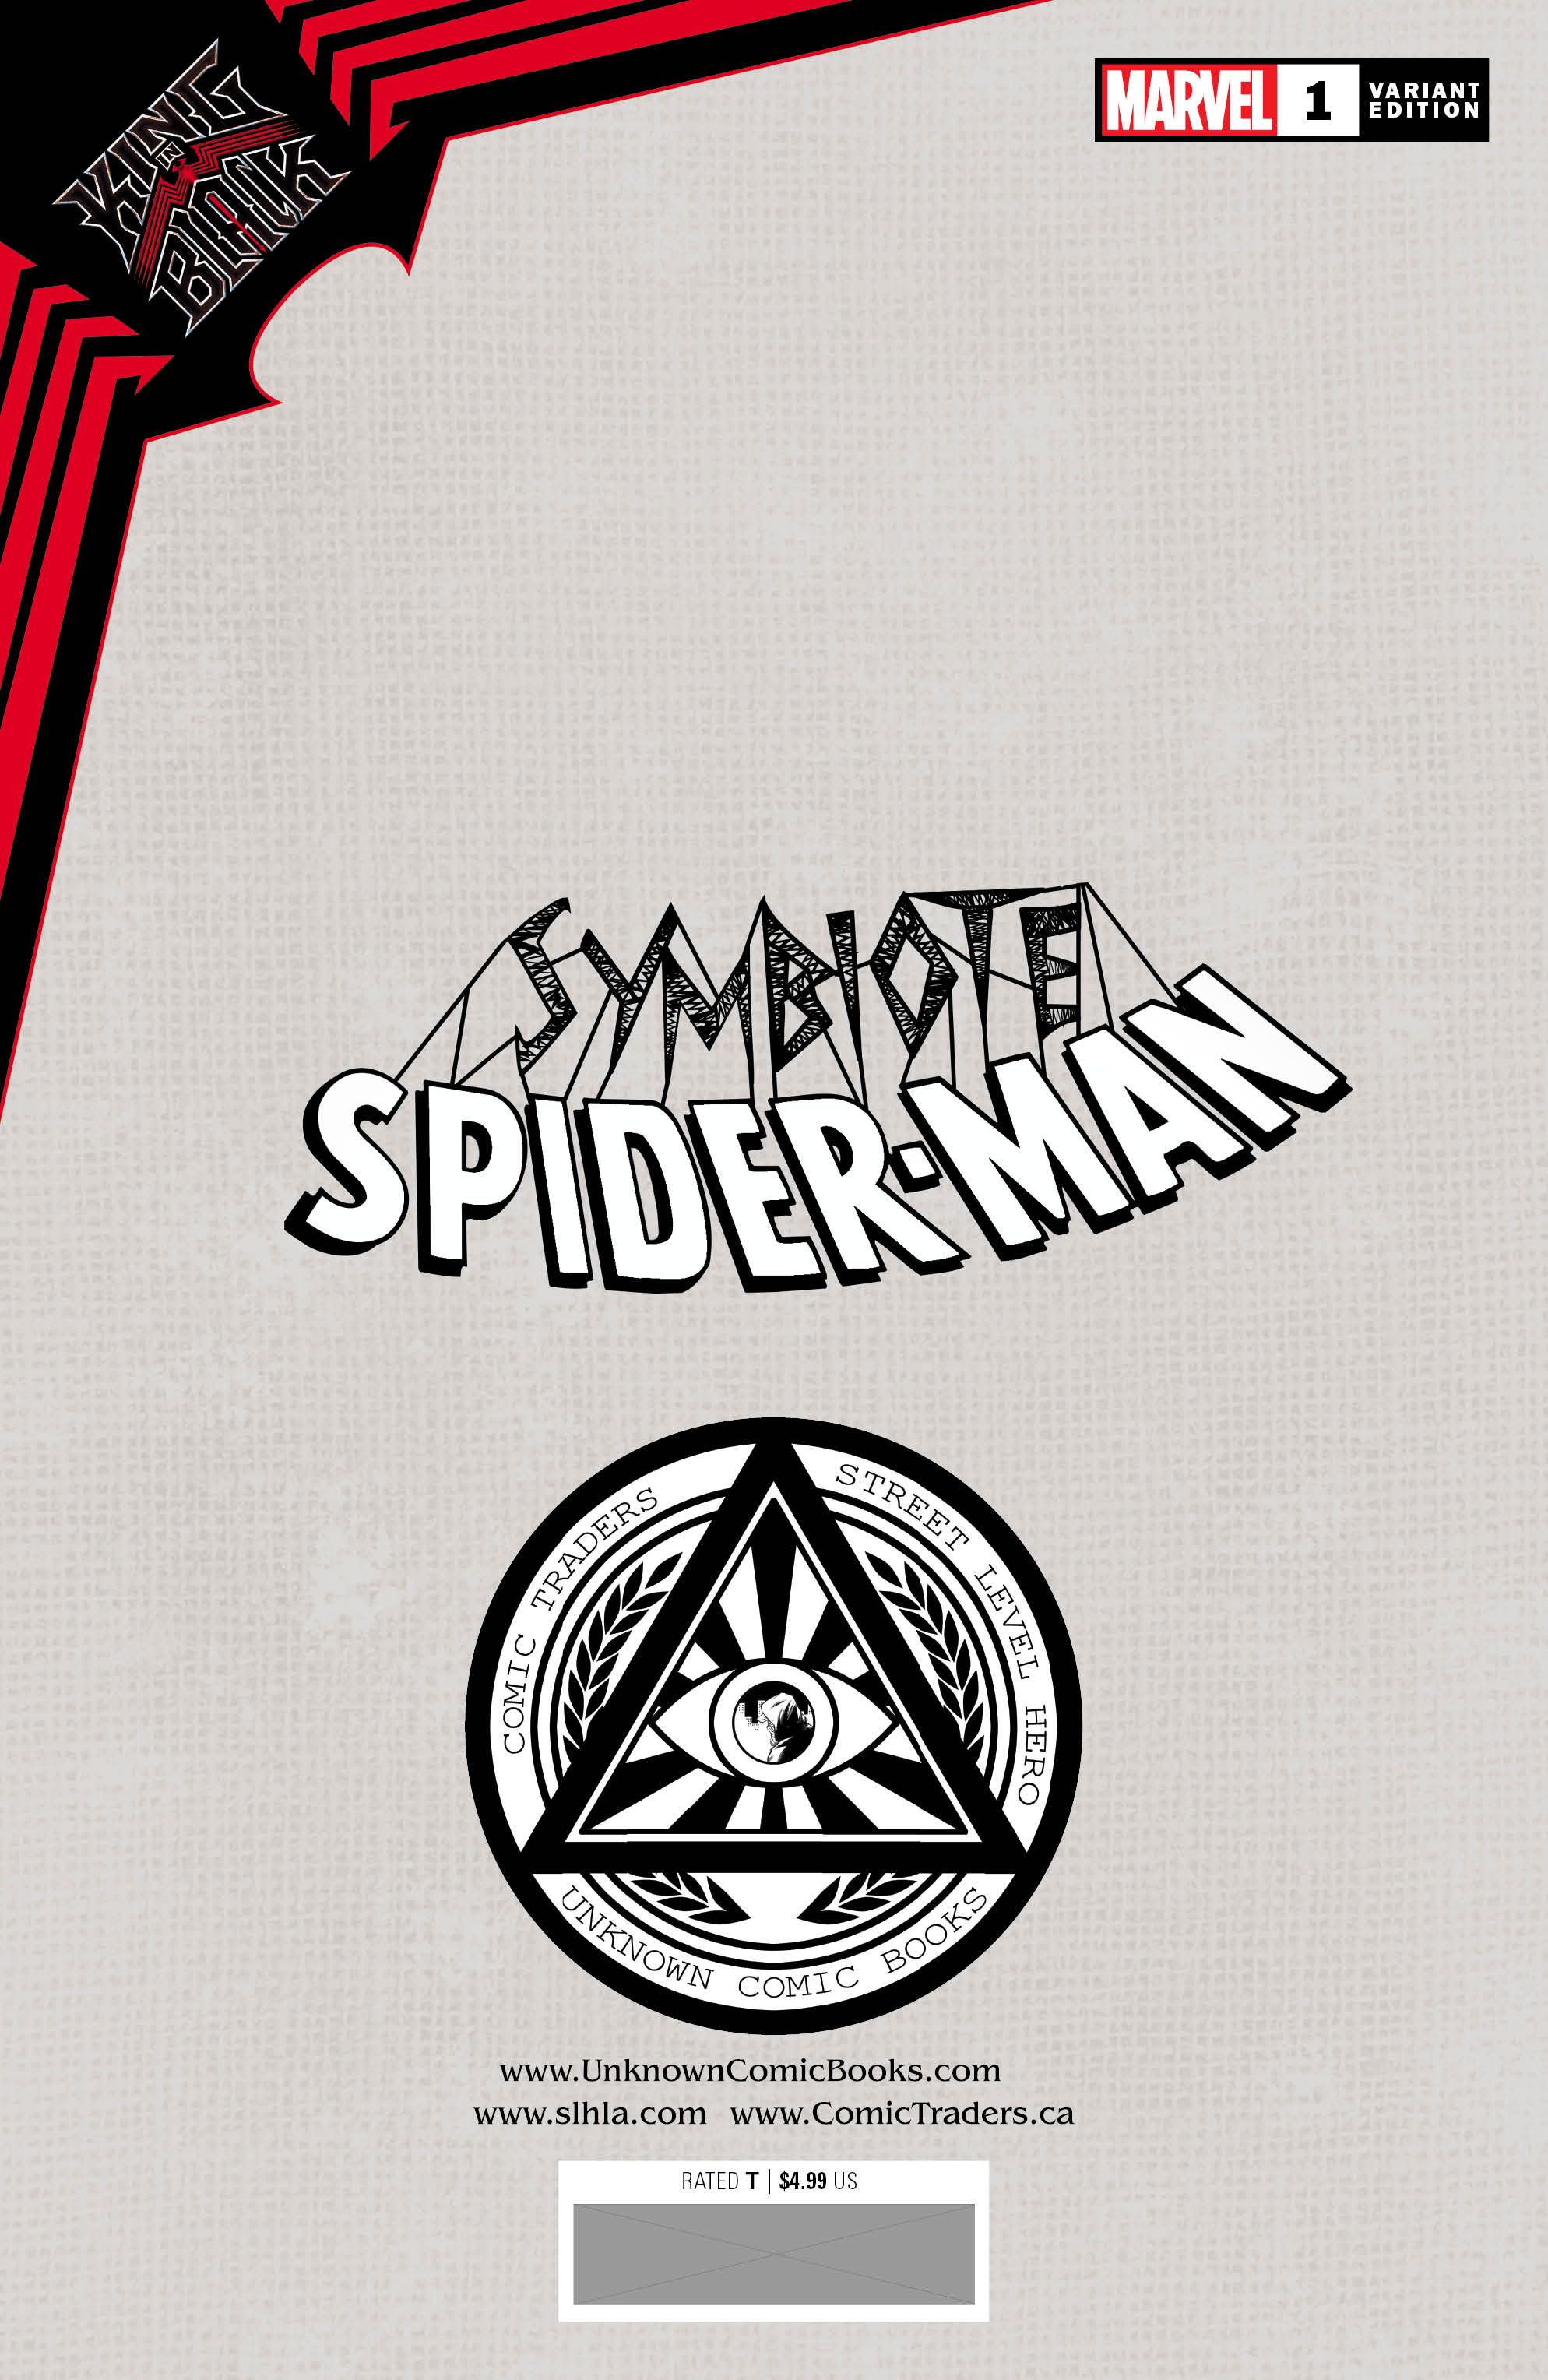 SYMBIOTE SPIDER-MAN KING IN BLACK #1 UNKNOWN COMICS GERALD PAREL EXCLUSIVE VAR (11/18/2020)